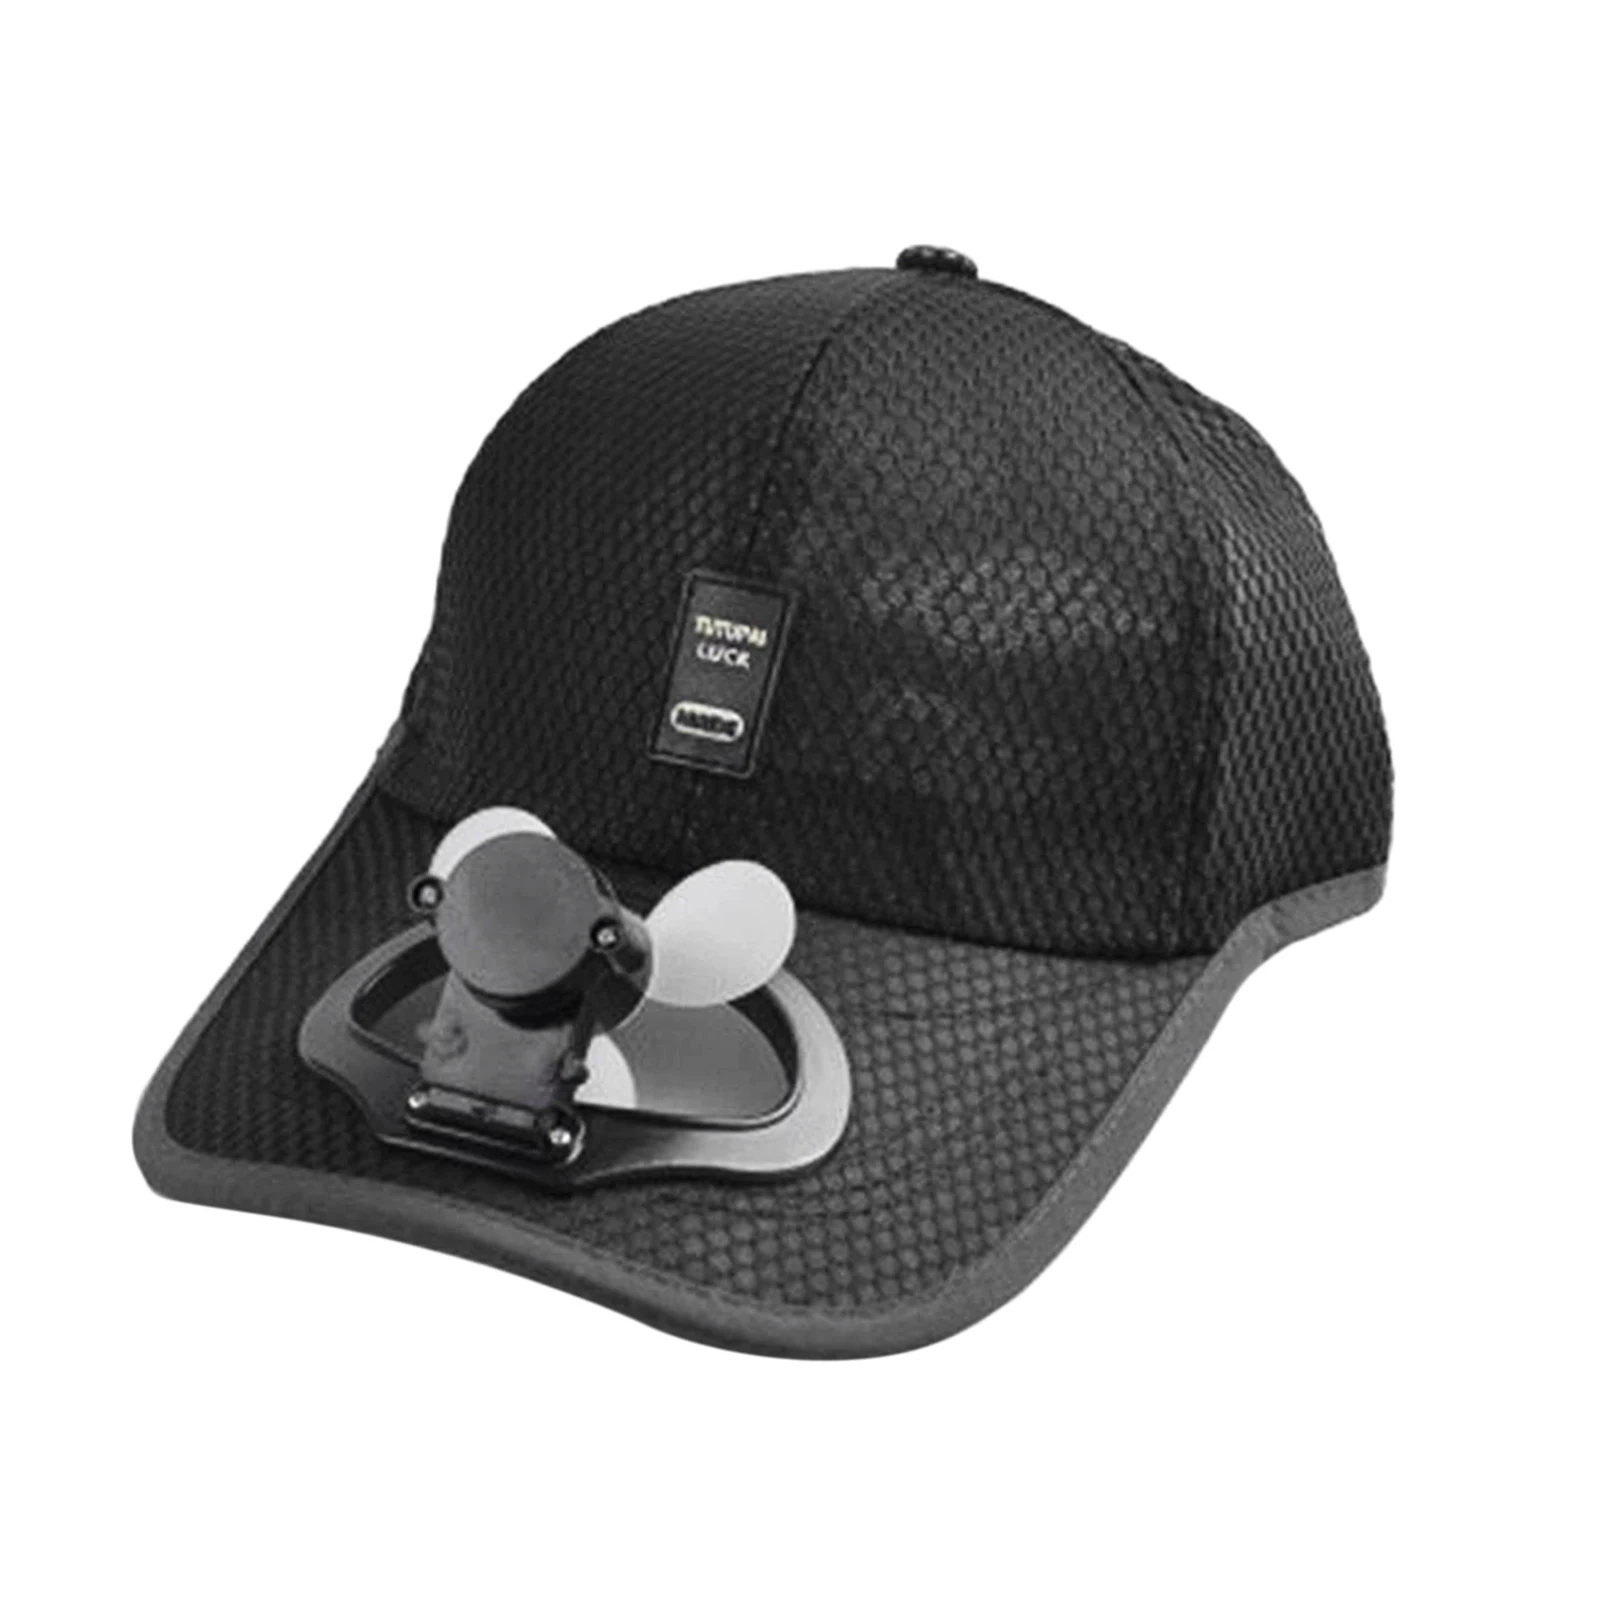 Cooling Fan Outdoor Camping Hiking Baseball Cap Summer Sun Visor Hat Peaked Cap Sun Protection USB Charging Fan Cooling Cap